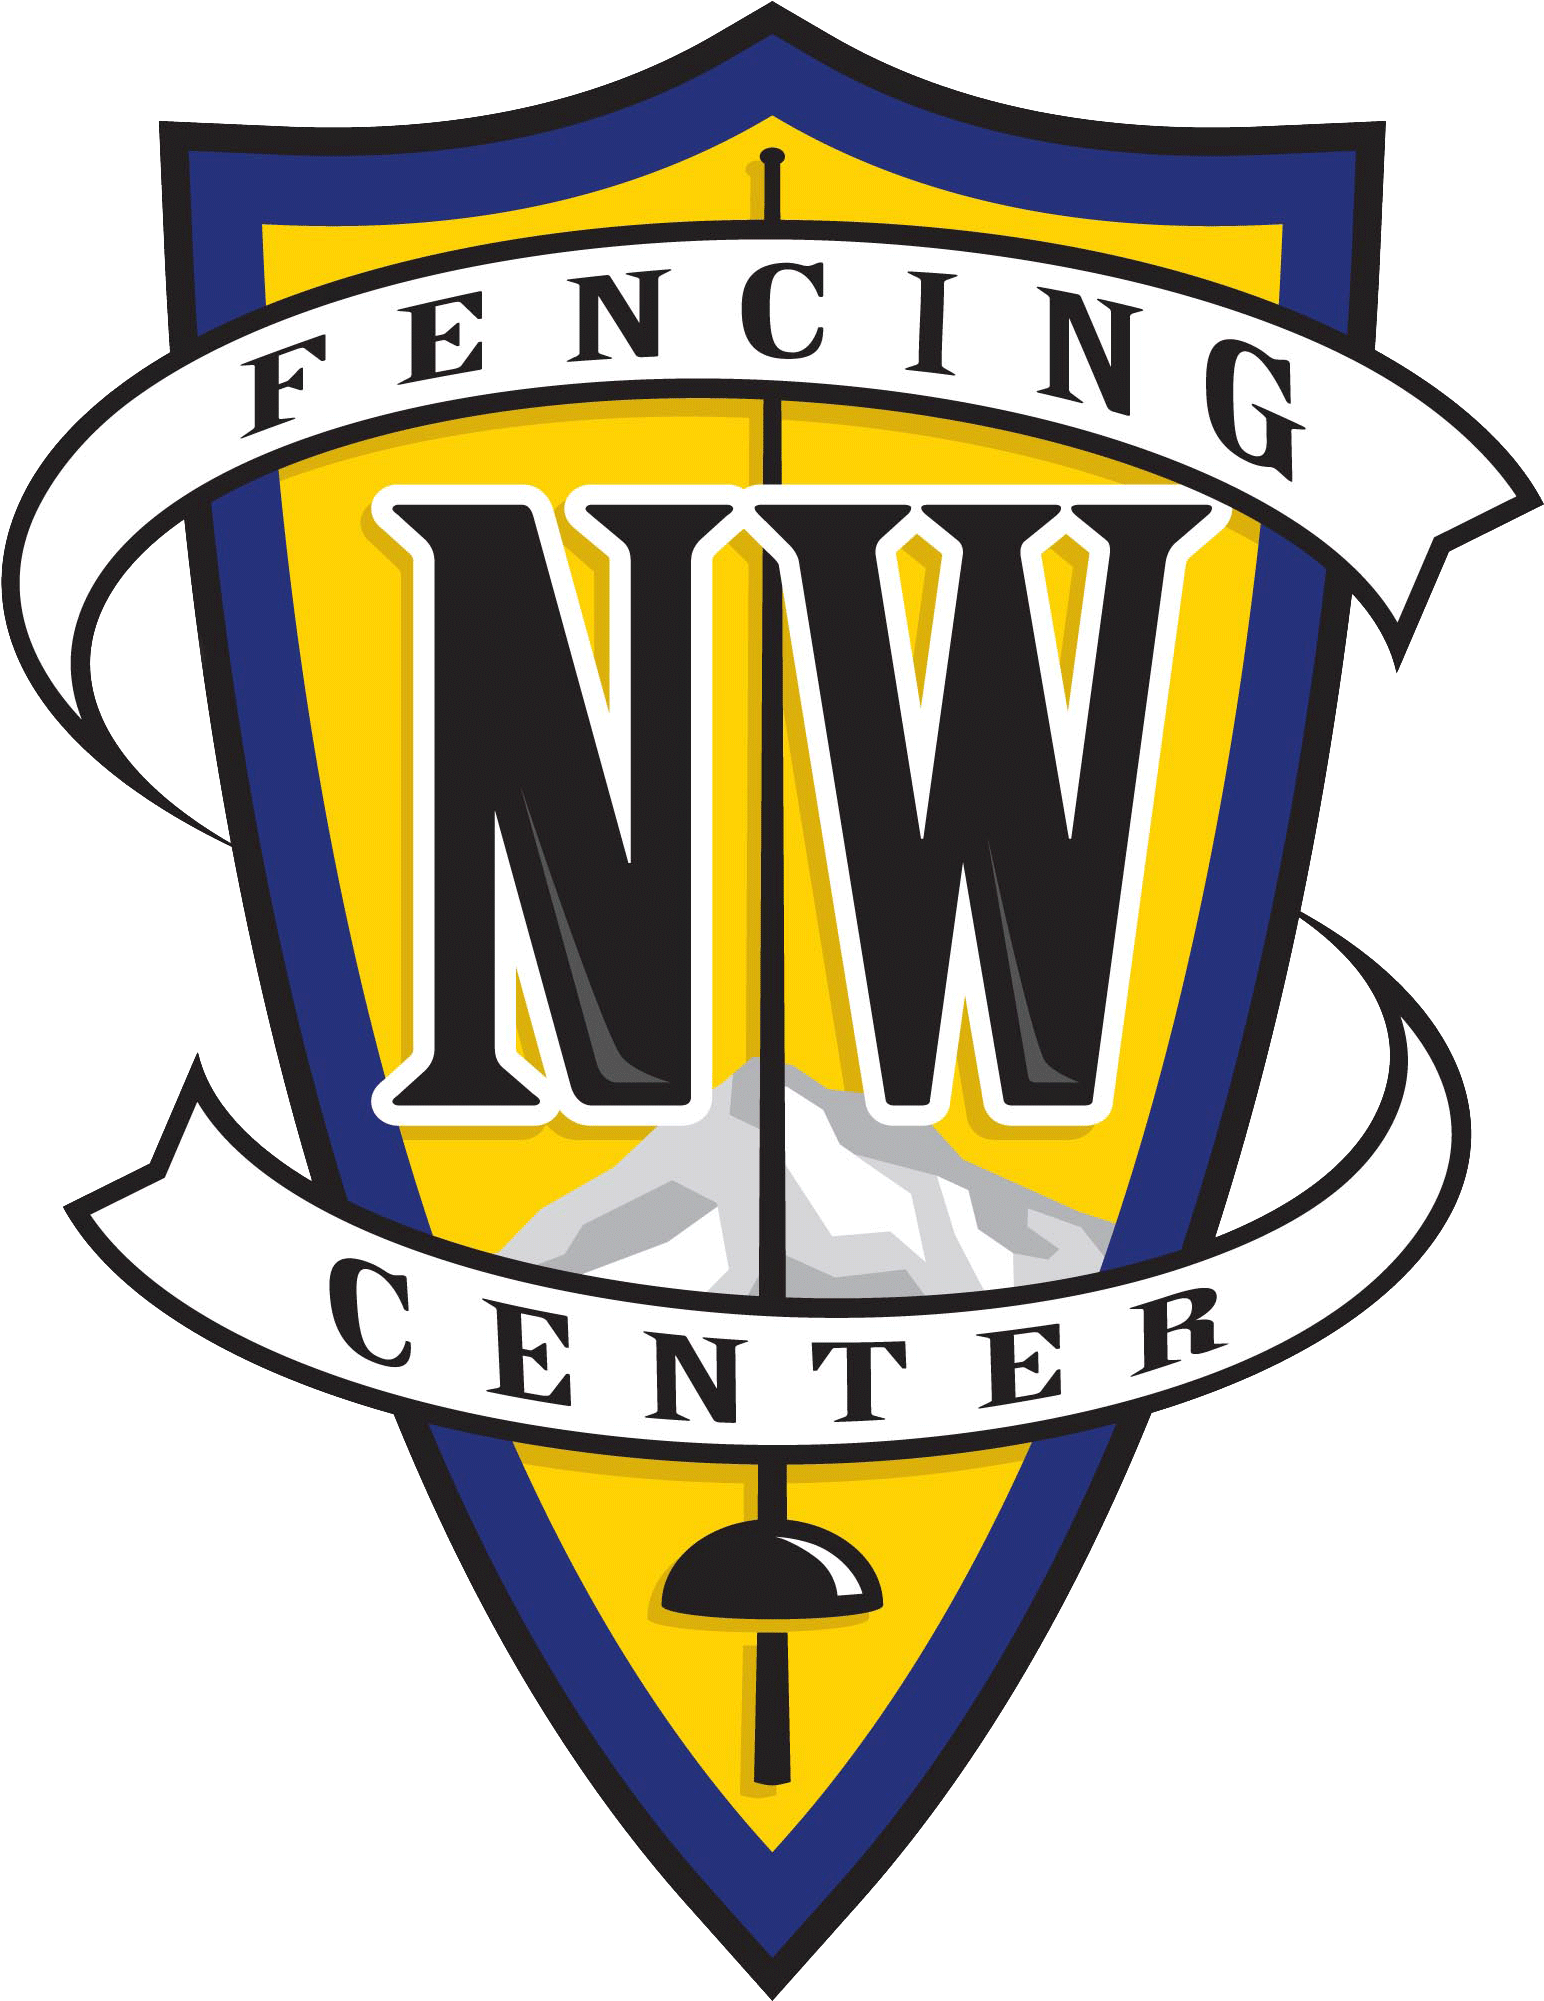 Nwfc-logo - Northwest Fencing Center (1586x2000)